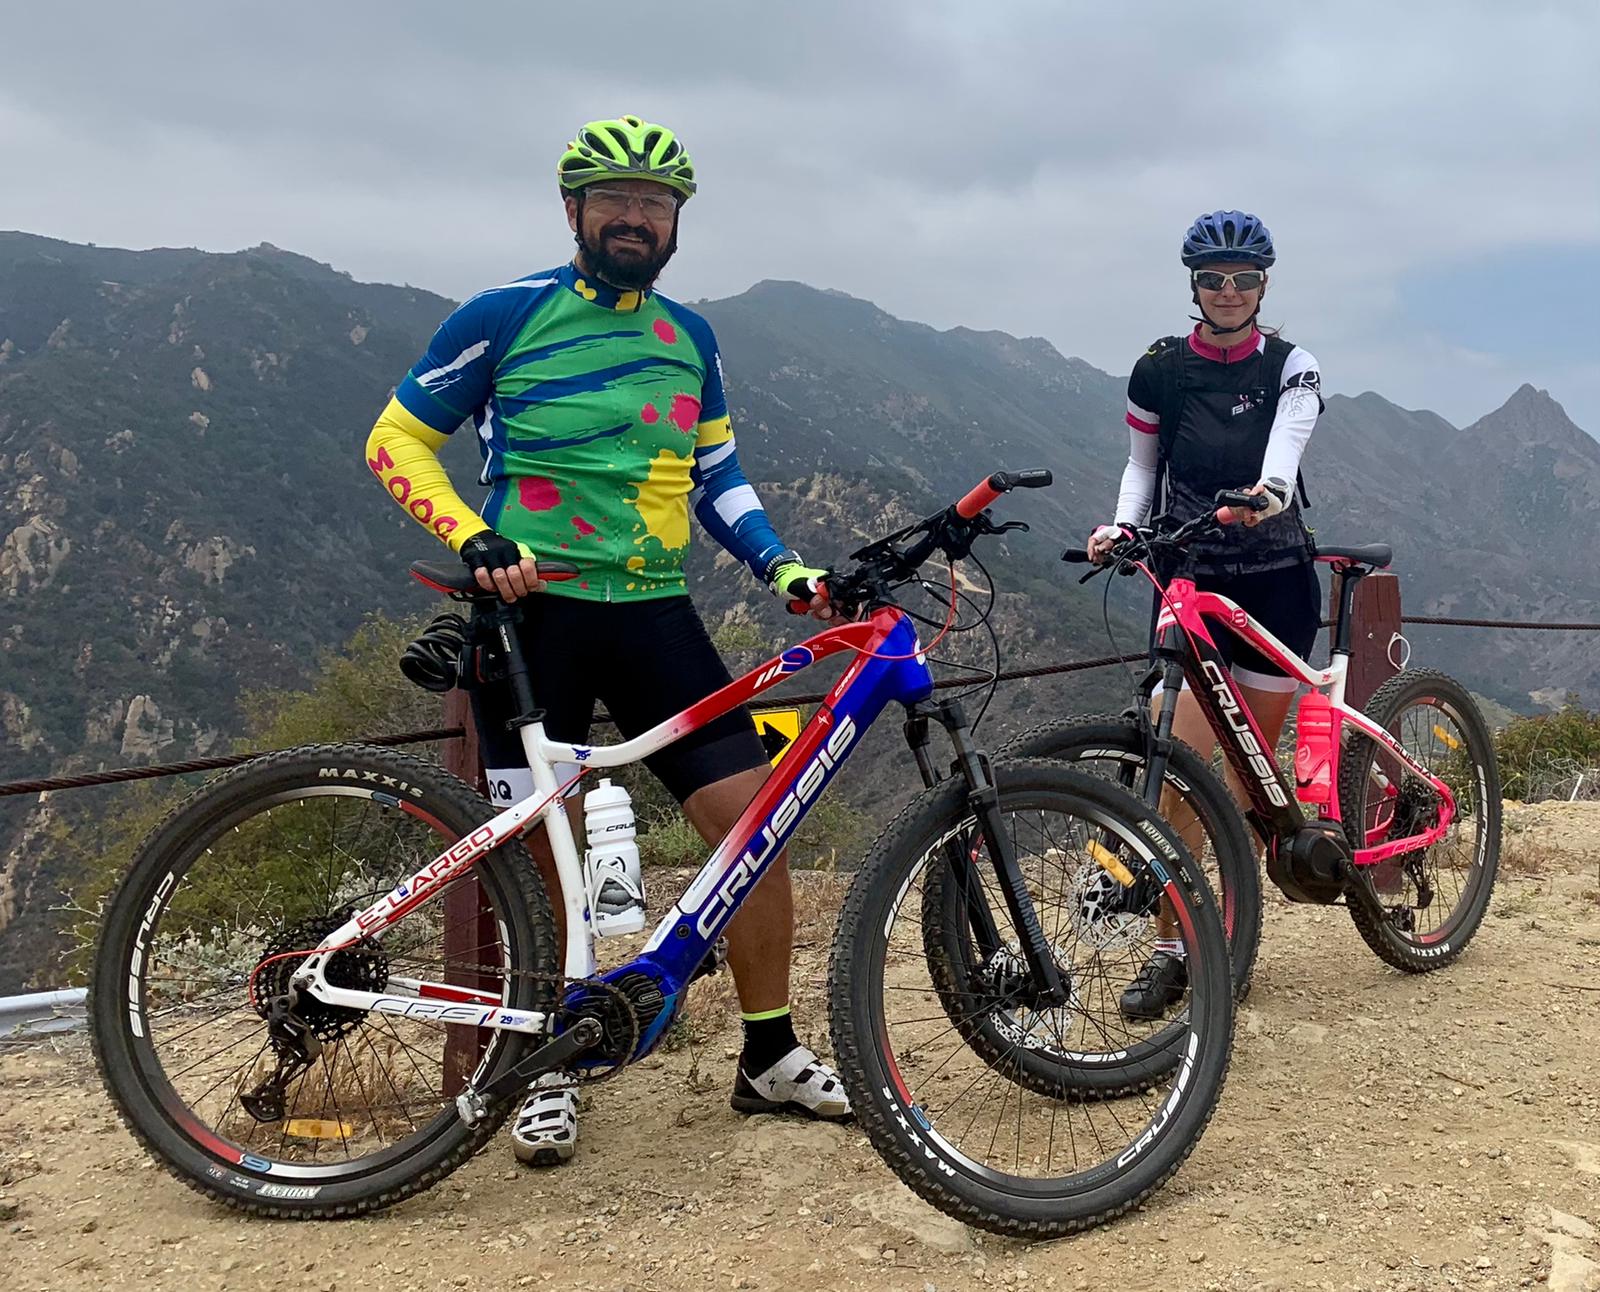 CRUSSIS bike trip Calabasas to Malibu across Santa Monica hills to Pacific ocean